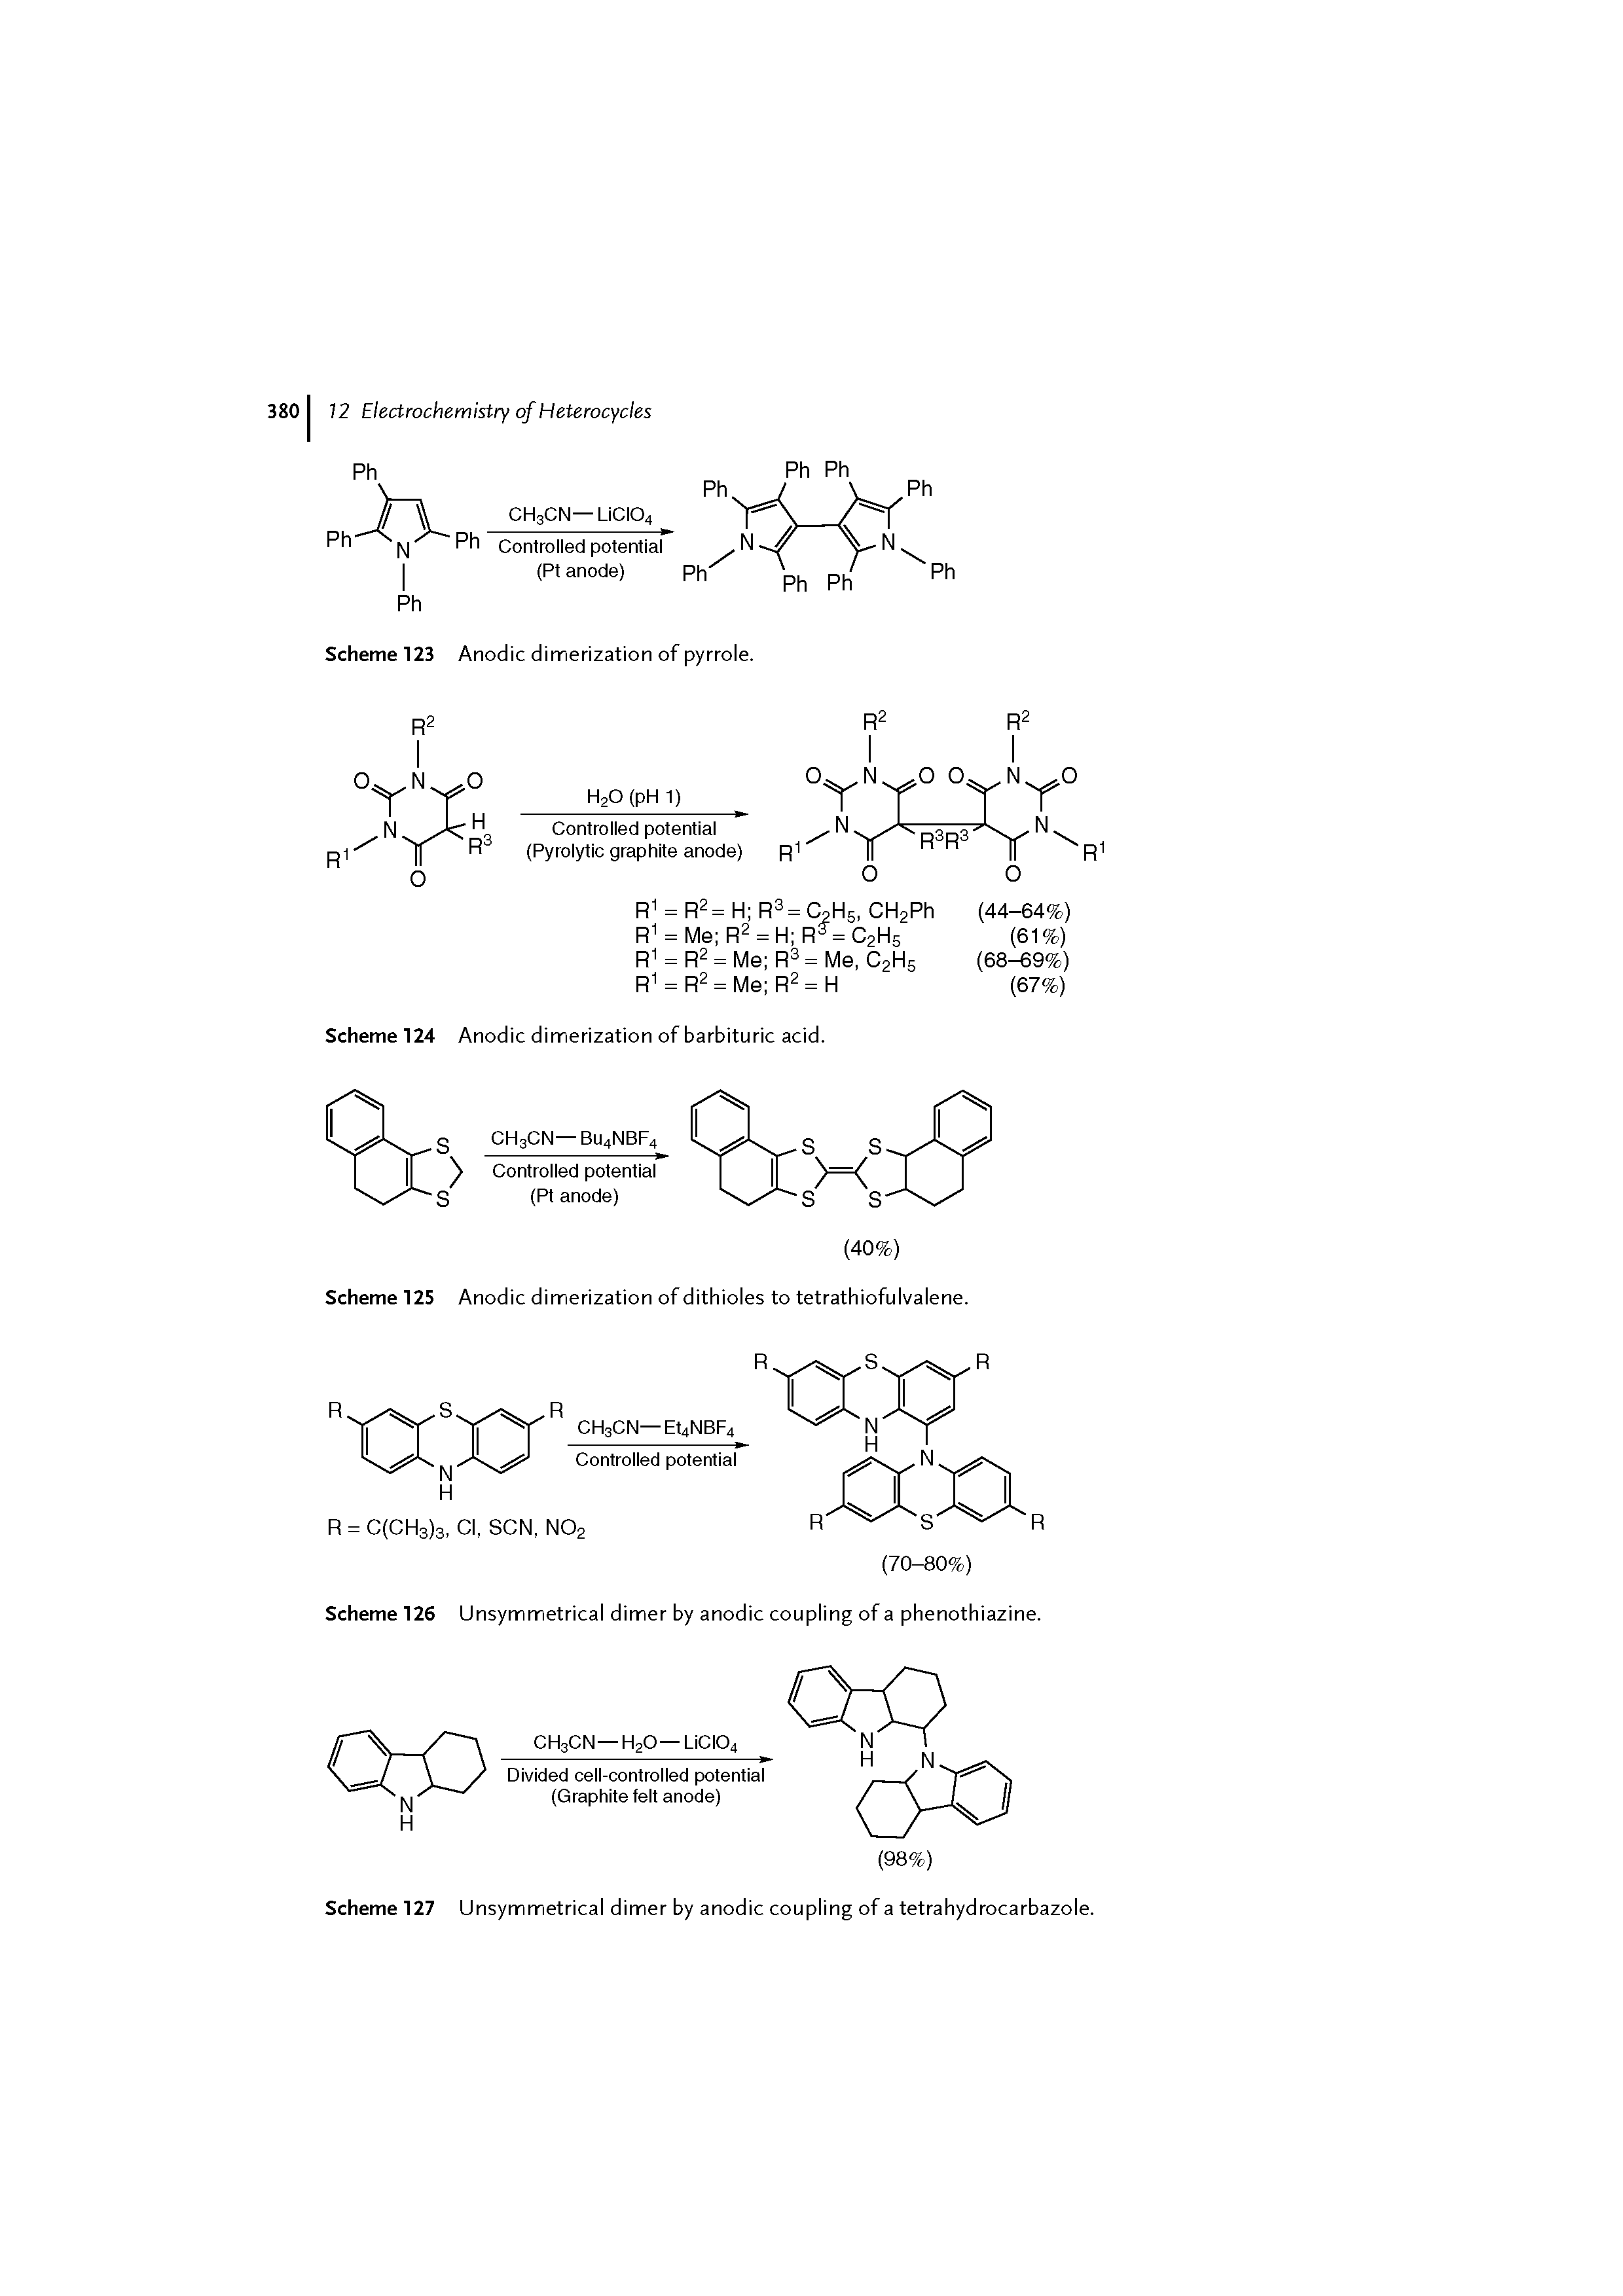 Scheme 127 Unsymmetrical dimer by anodic coupling of a tetrahydrocarbazole.